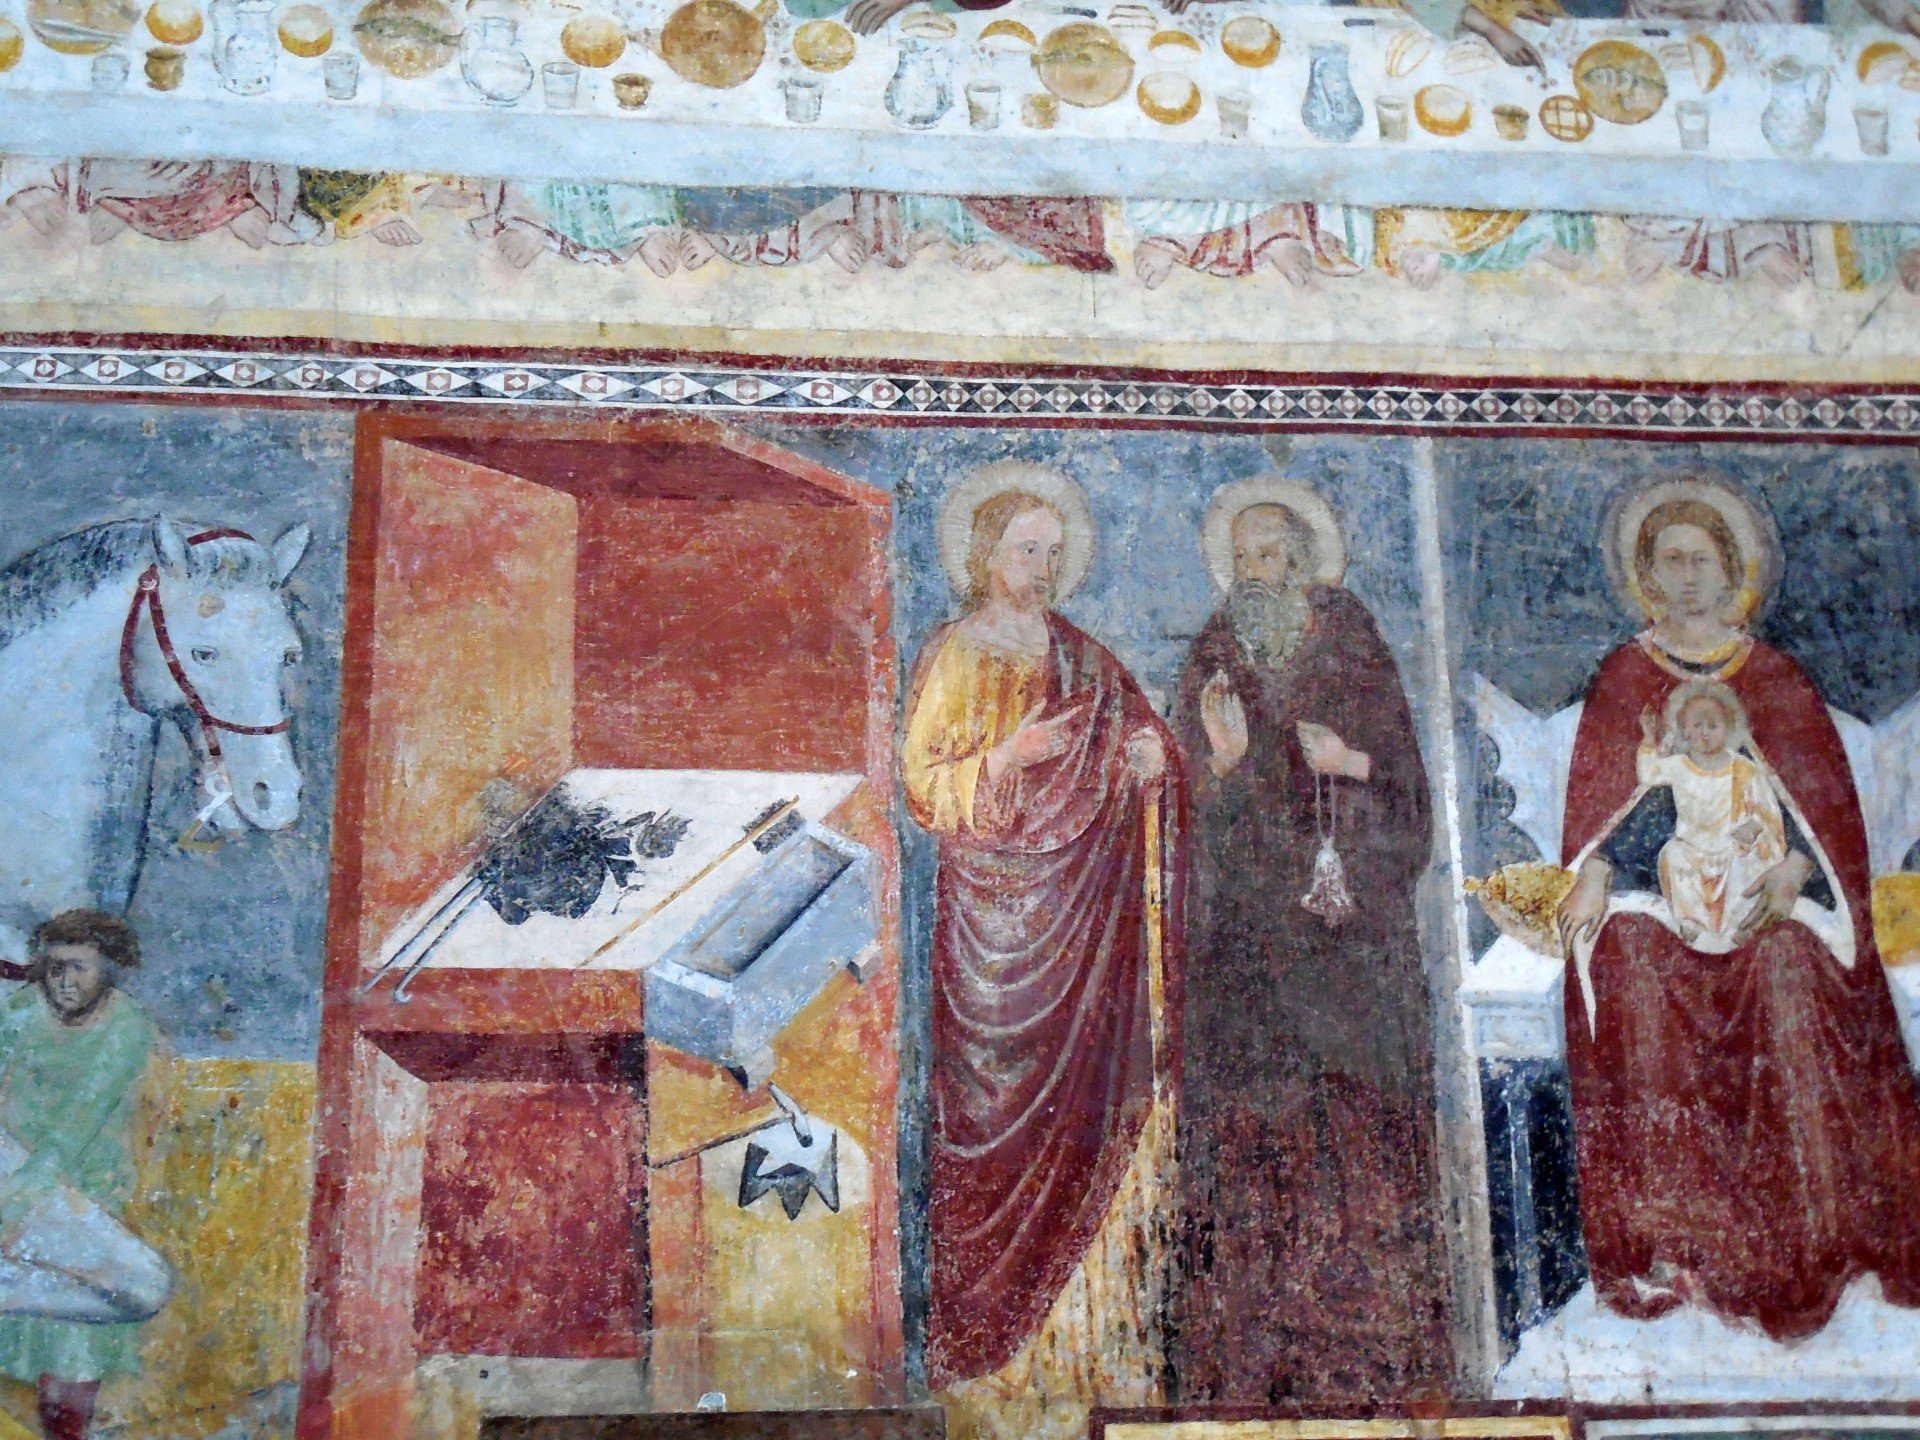 Bergamo, Basilica di Santa Maria Maggiore . Frescoes depicting the Last Supper and Stories of St. Eligius, XIV century